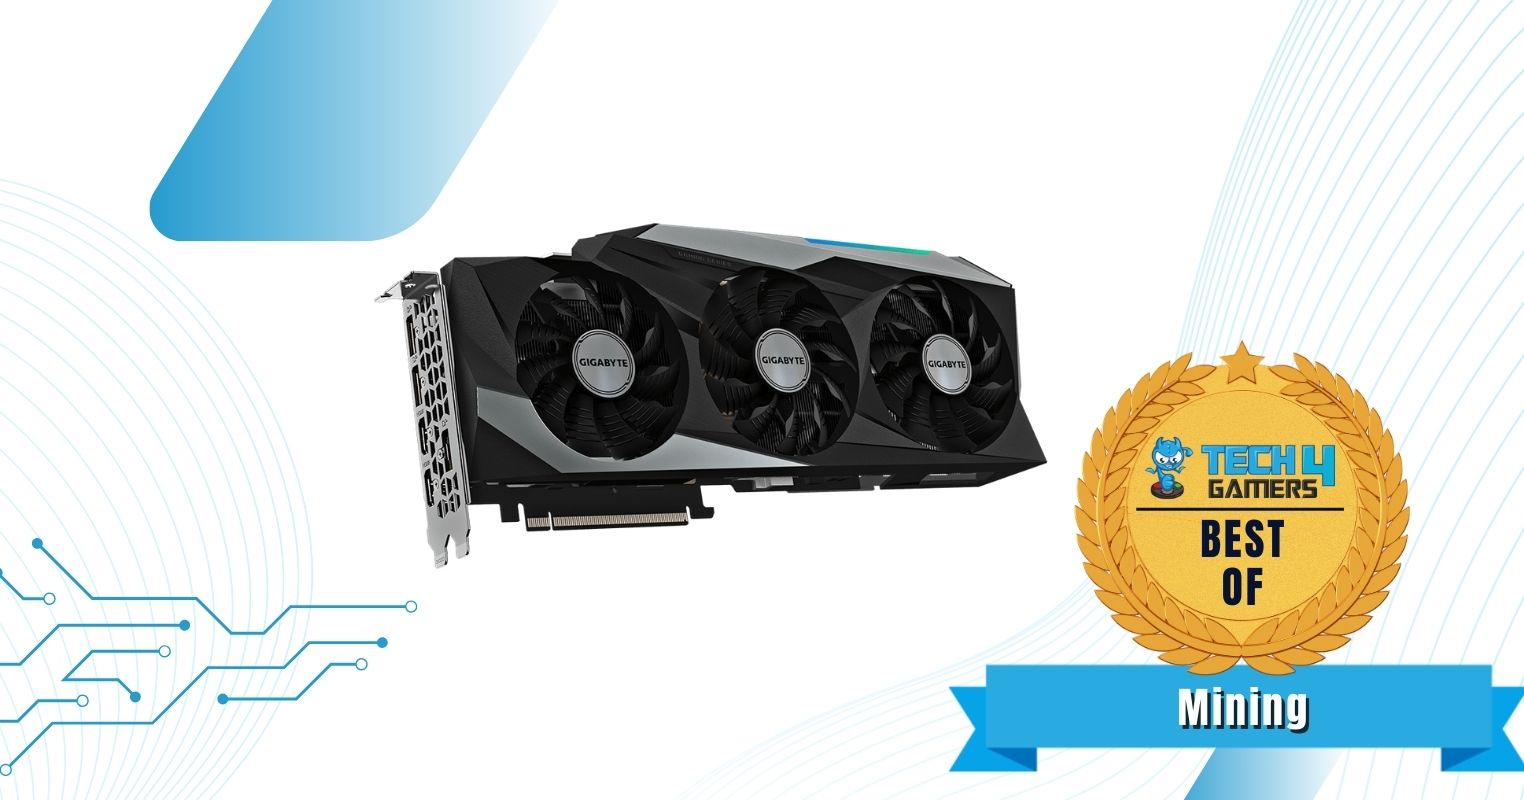 Best Mining RTX 3090 Graphics Card - Gigabyte GeForce RTX 3090 GAMING OC